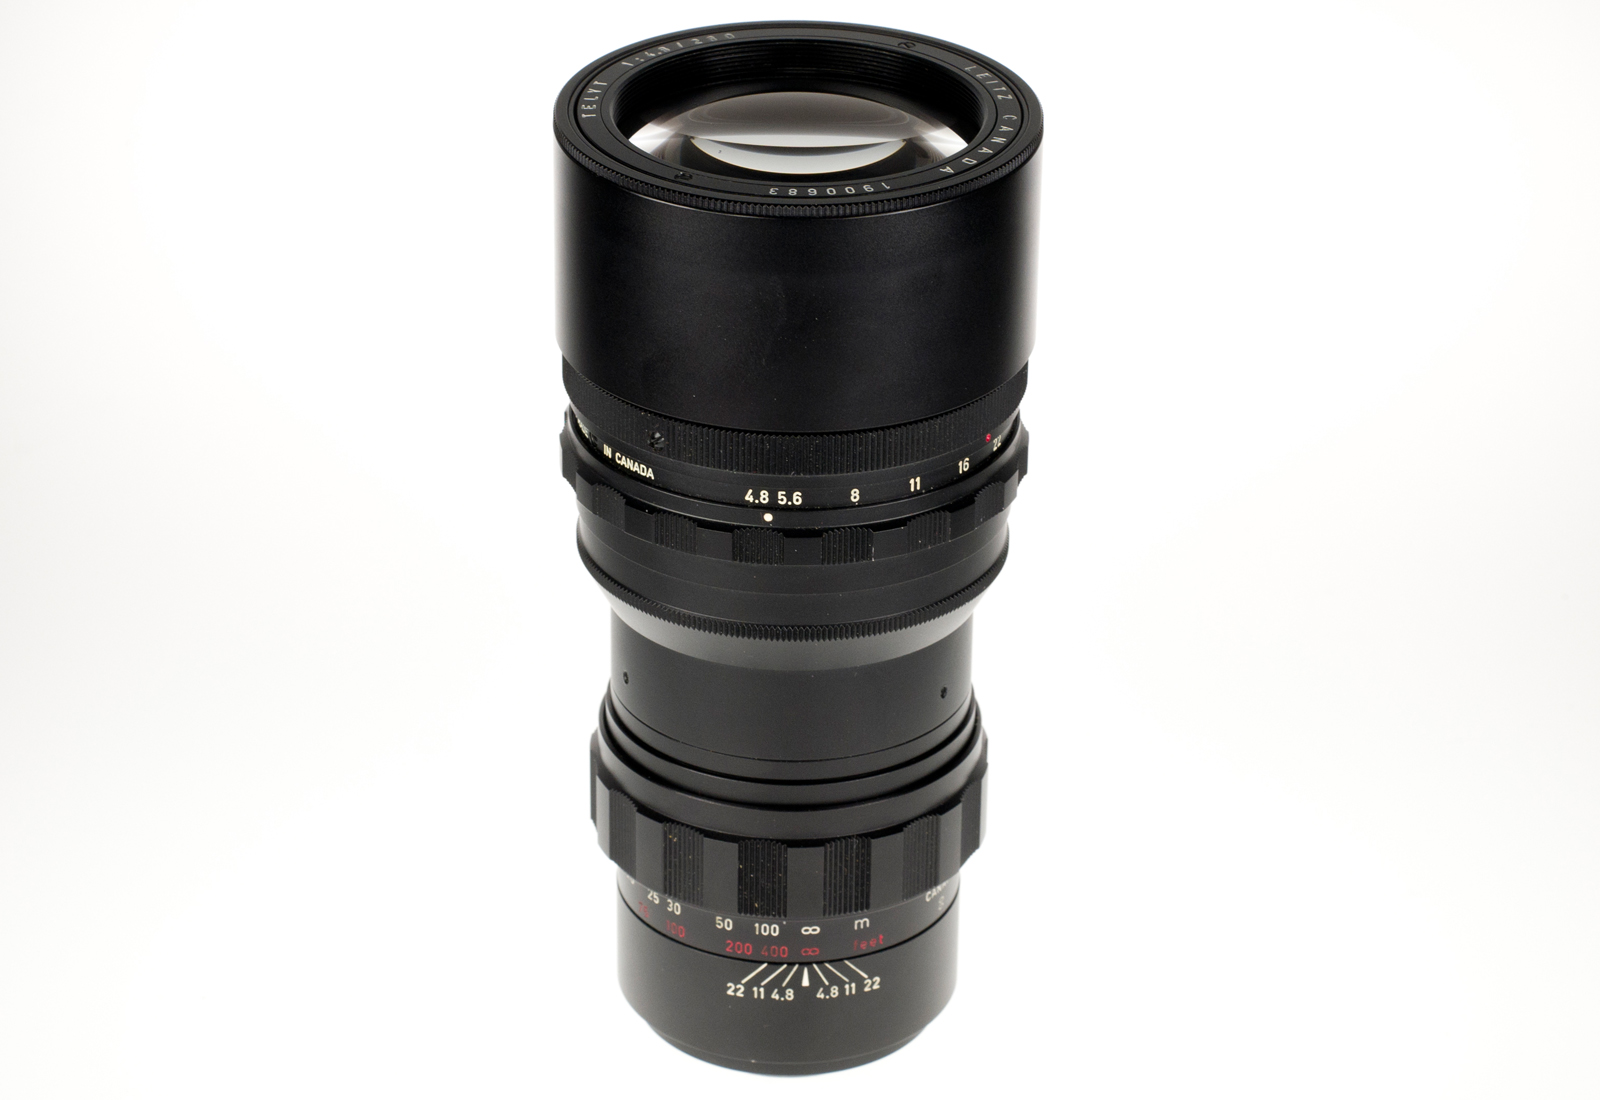 Leica MDa, chrome + Telyt 1:4,8/280mm, black + Visoflex II